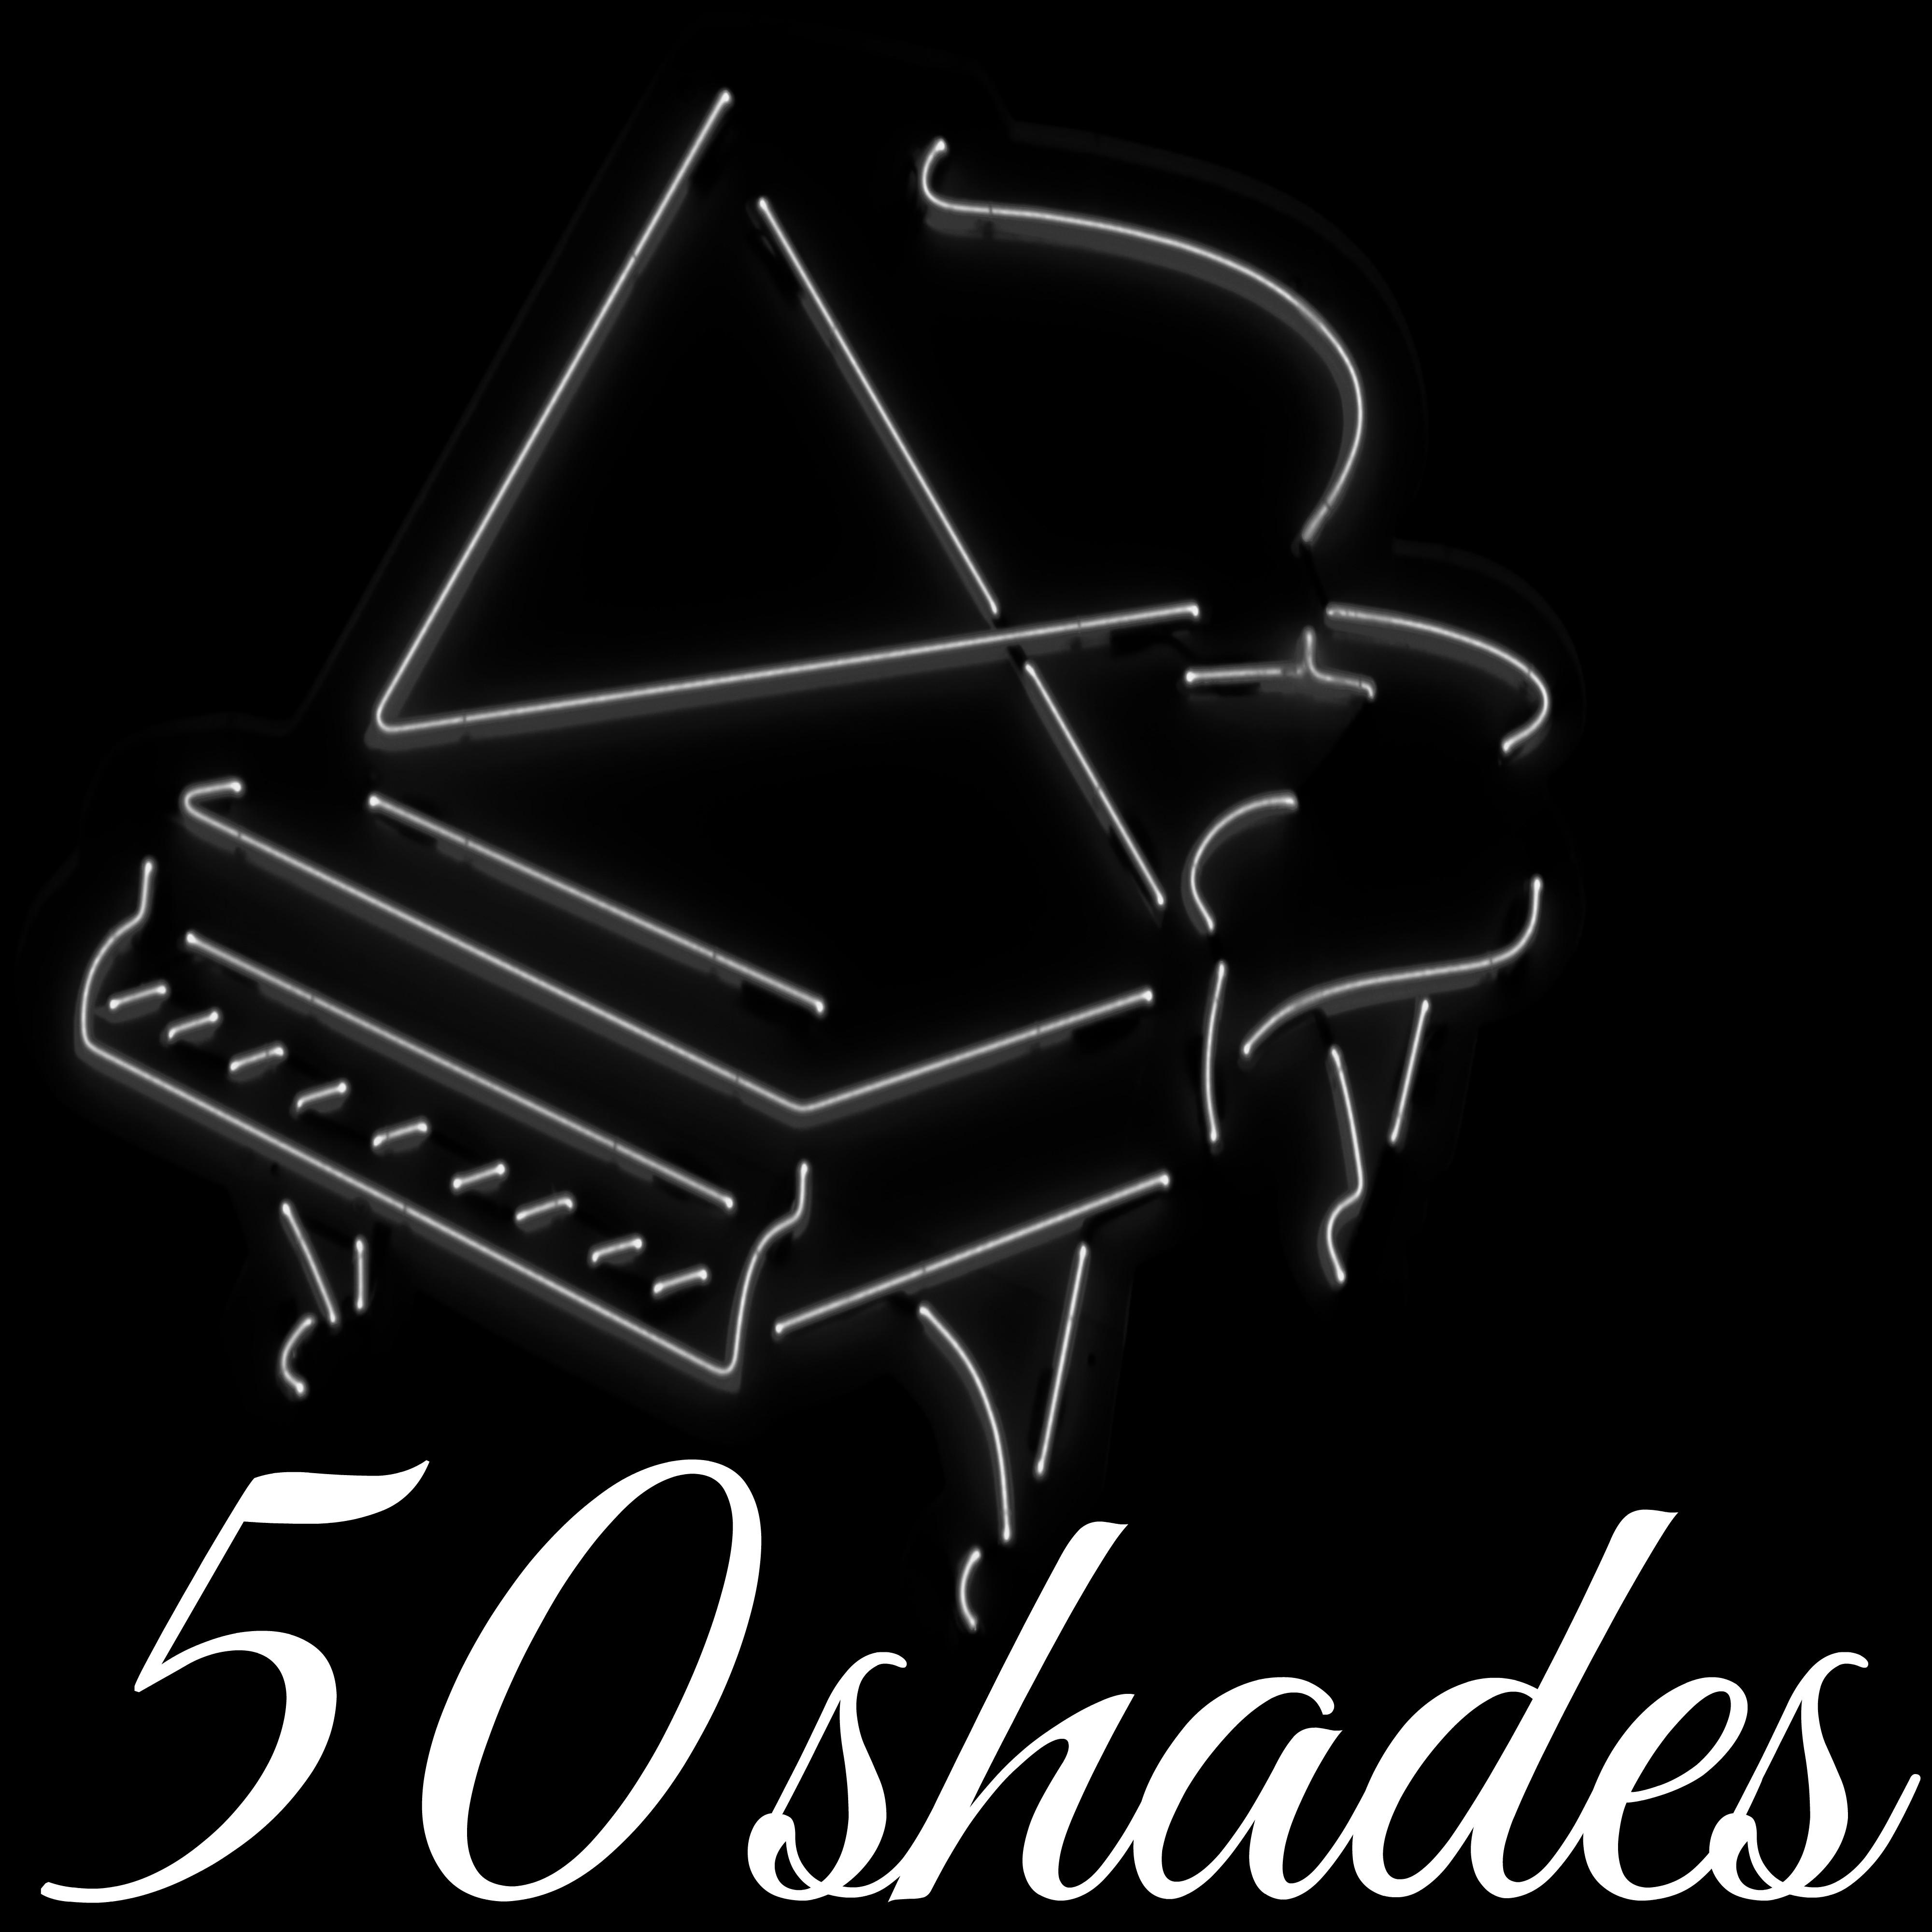 50 Shades - Sensual Lounge Music & Sexy Jazz, Piano Bar Chillax for Romantic Moments